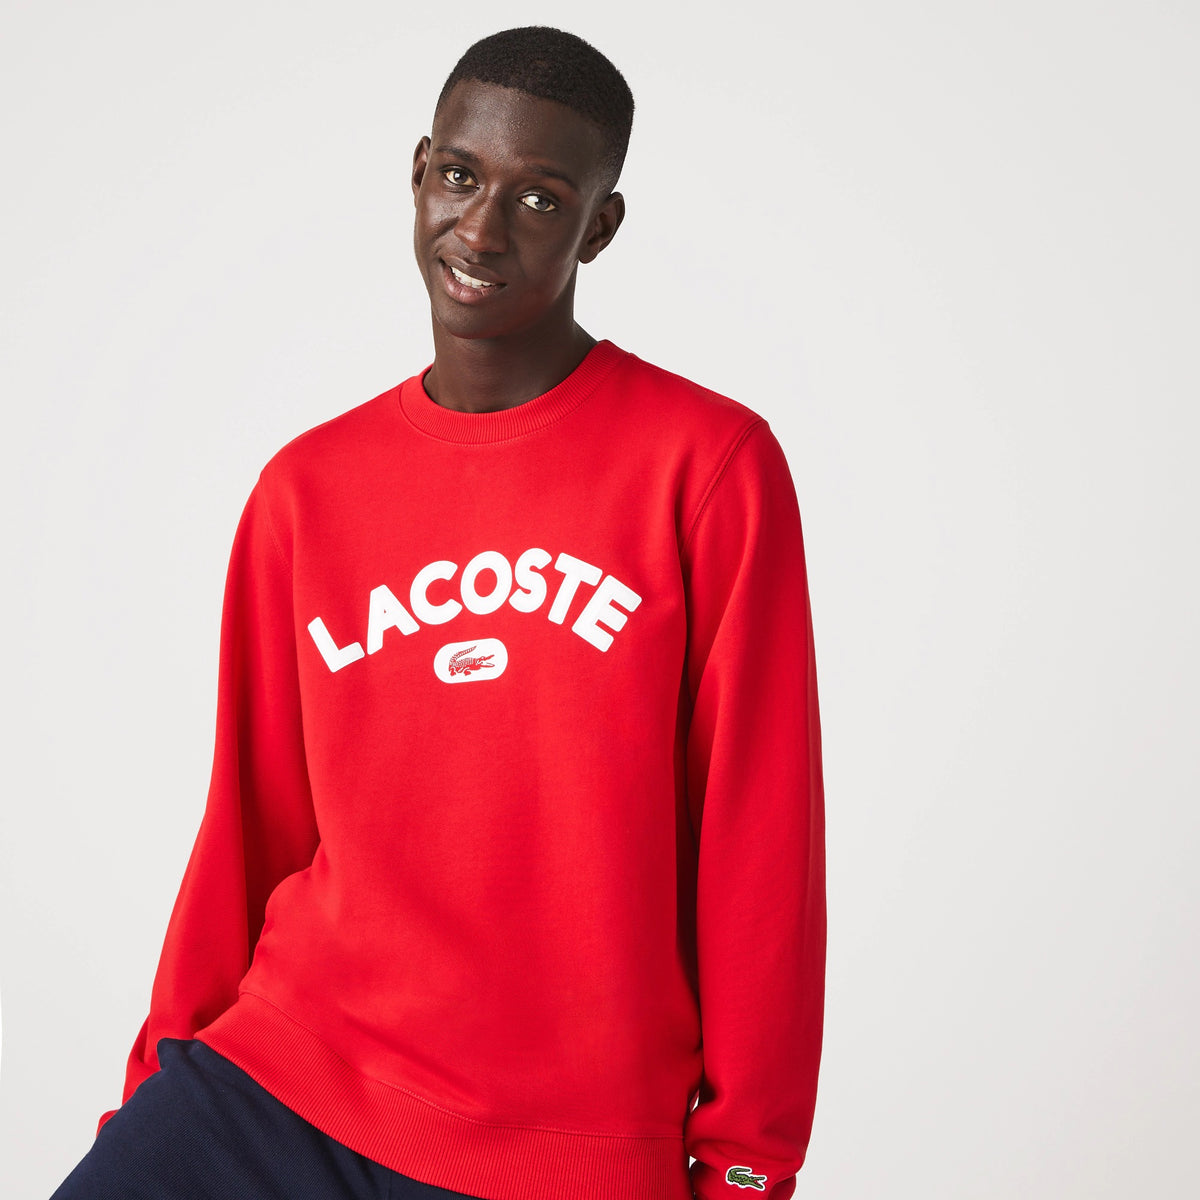 Lacoste Branded Sweatshirt – stm56.com